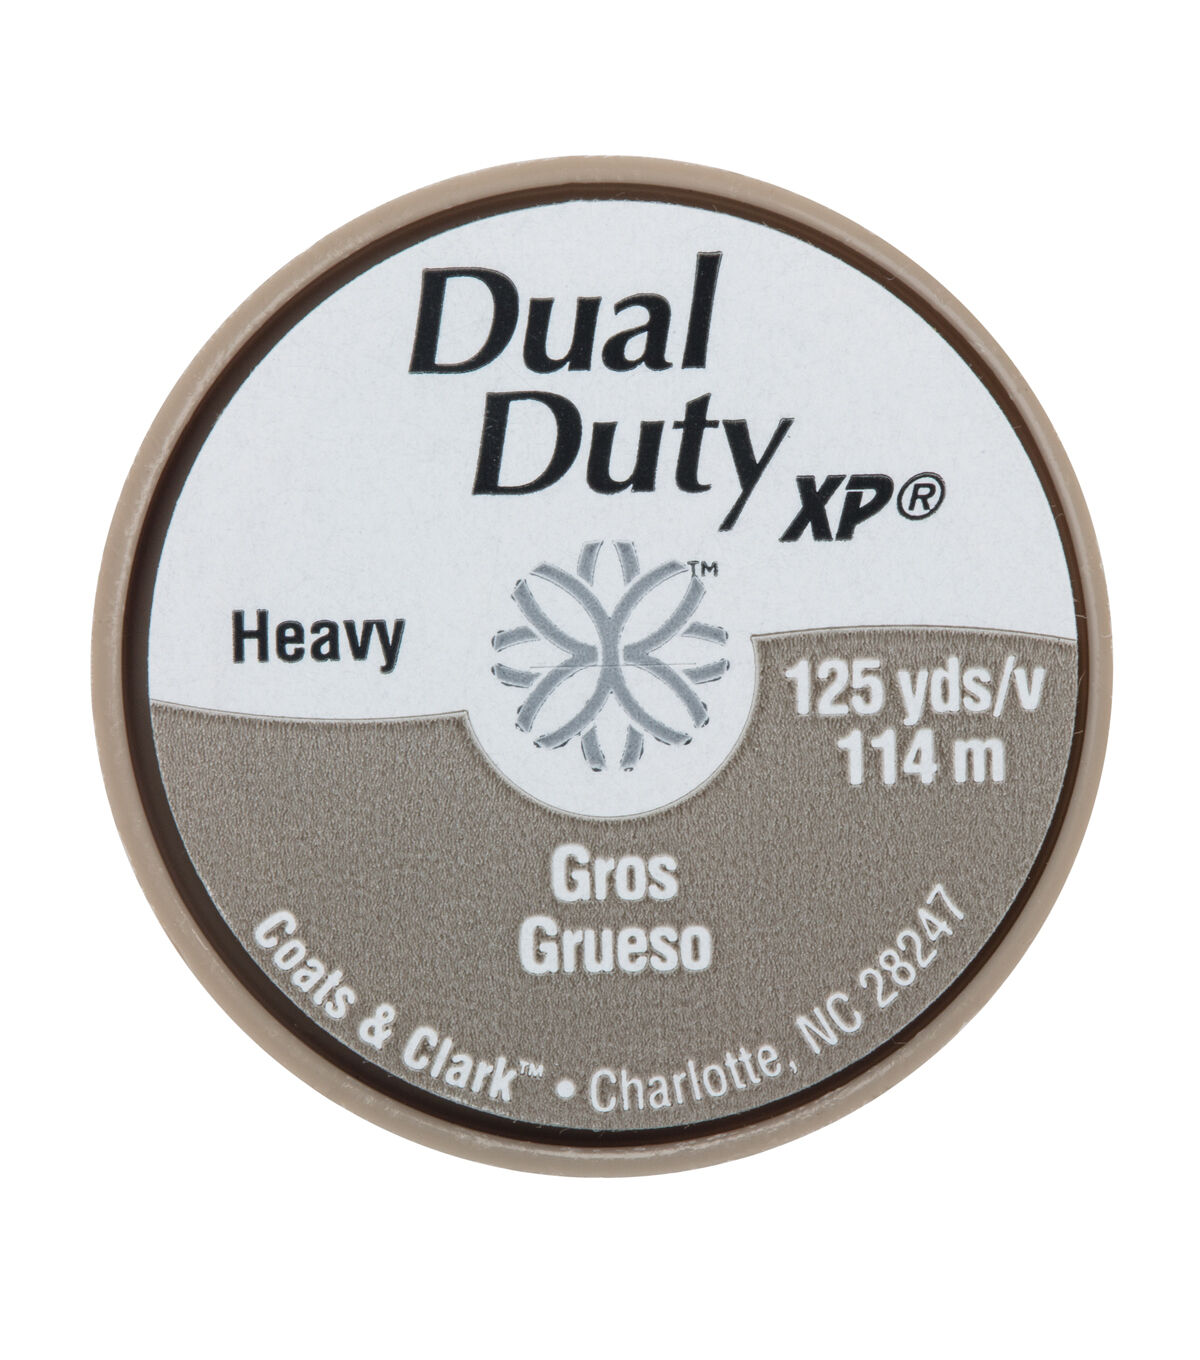 Coats & Clark Dual Duty XP General Purpose Thread 125yds